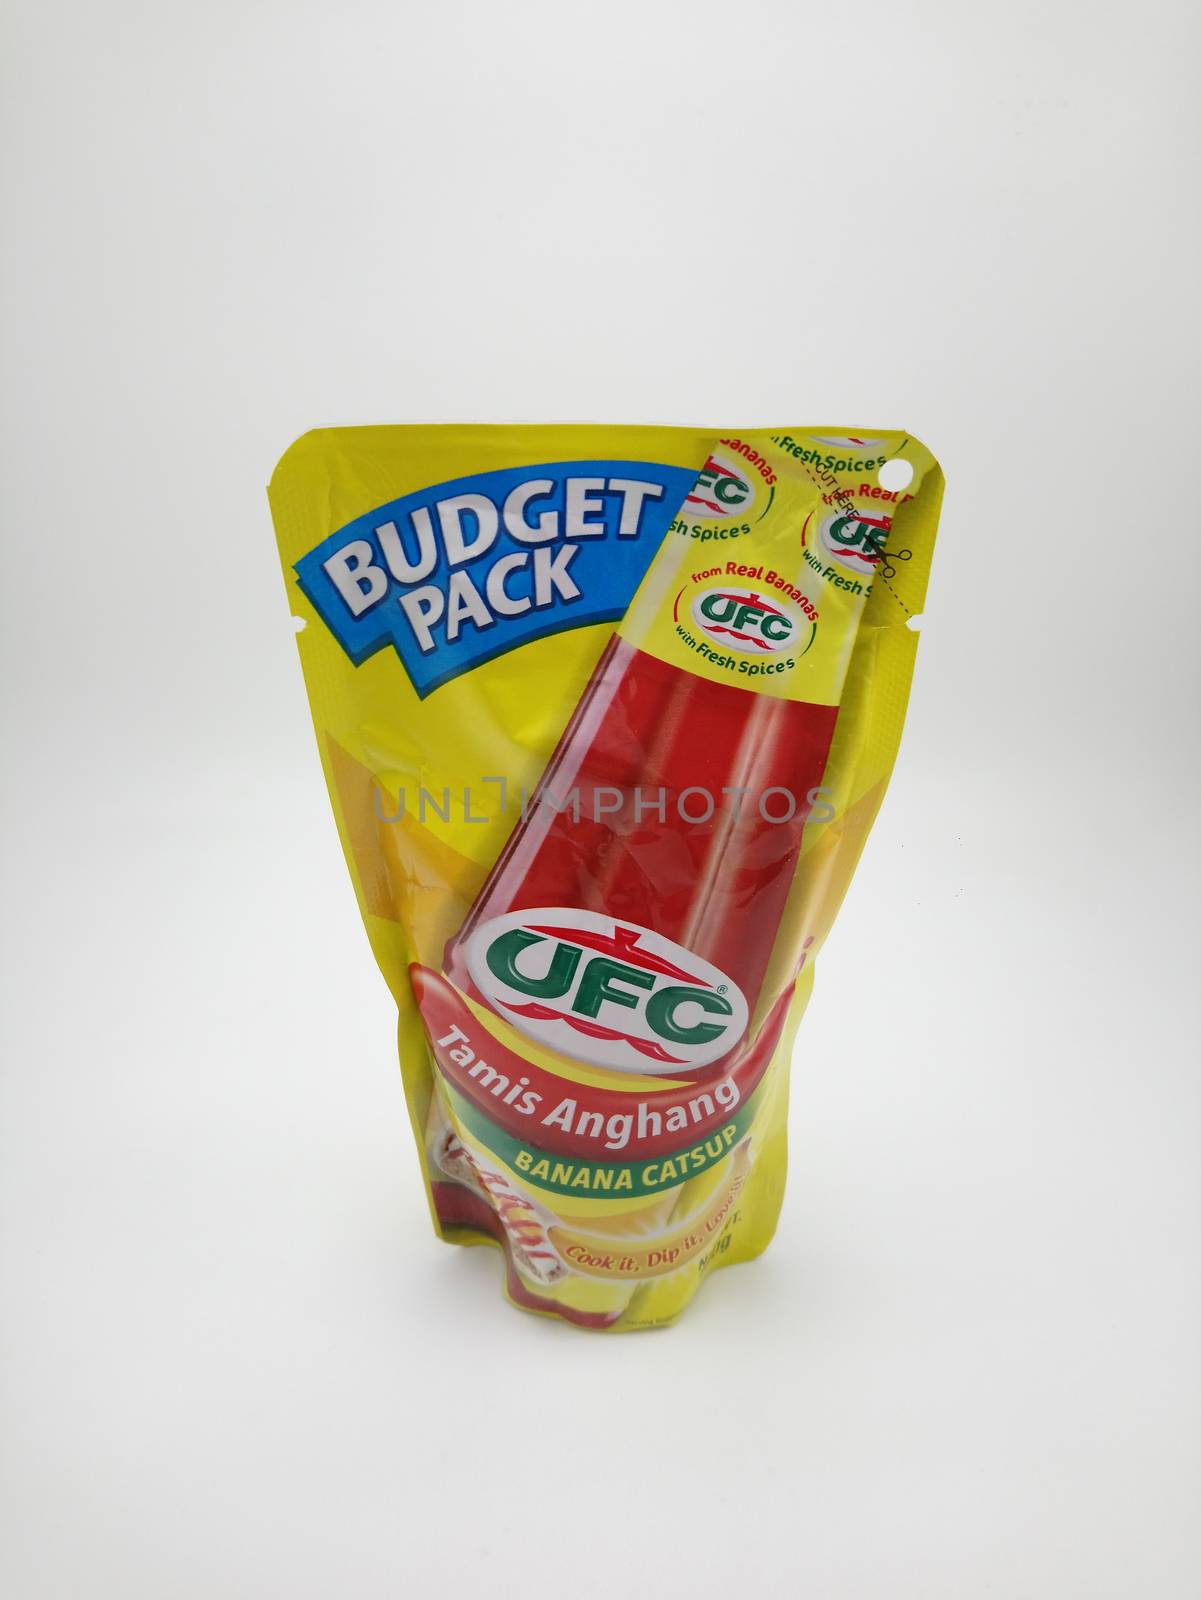 MANILA, PH - SEPT 25 - UFC banana ketchup budget pack on September 25, 2020 in Manila, Philippines.